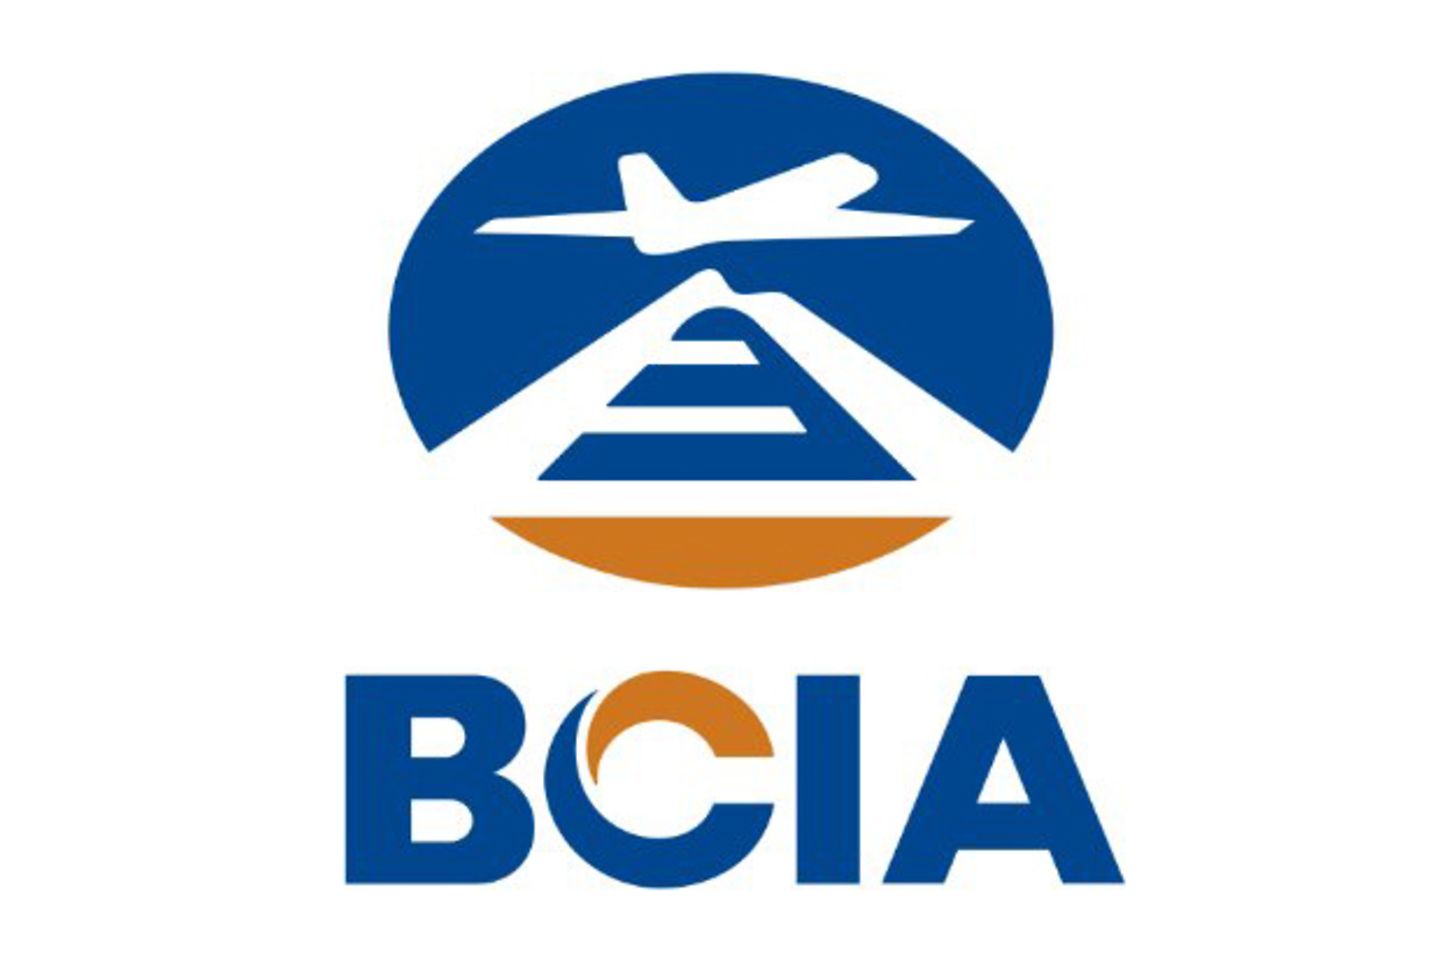 Official logo of Beijing Airport